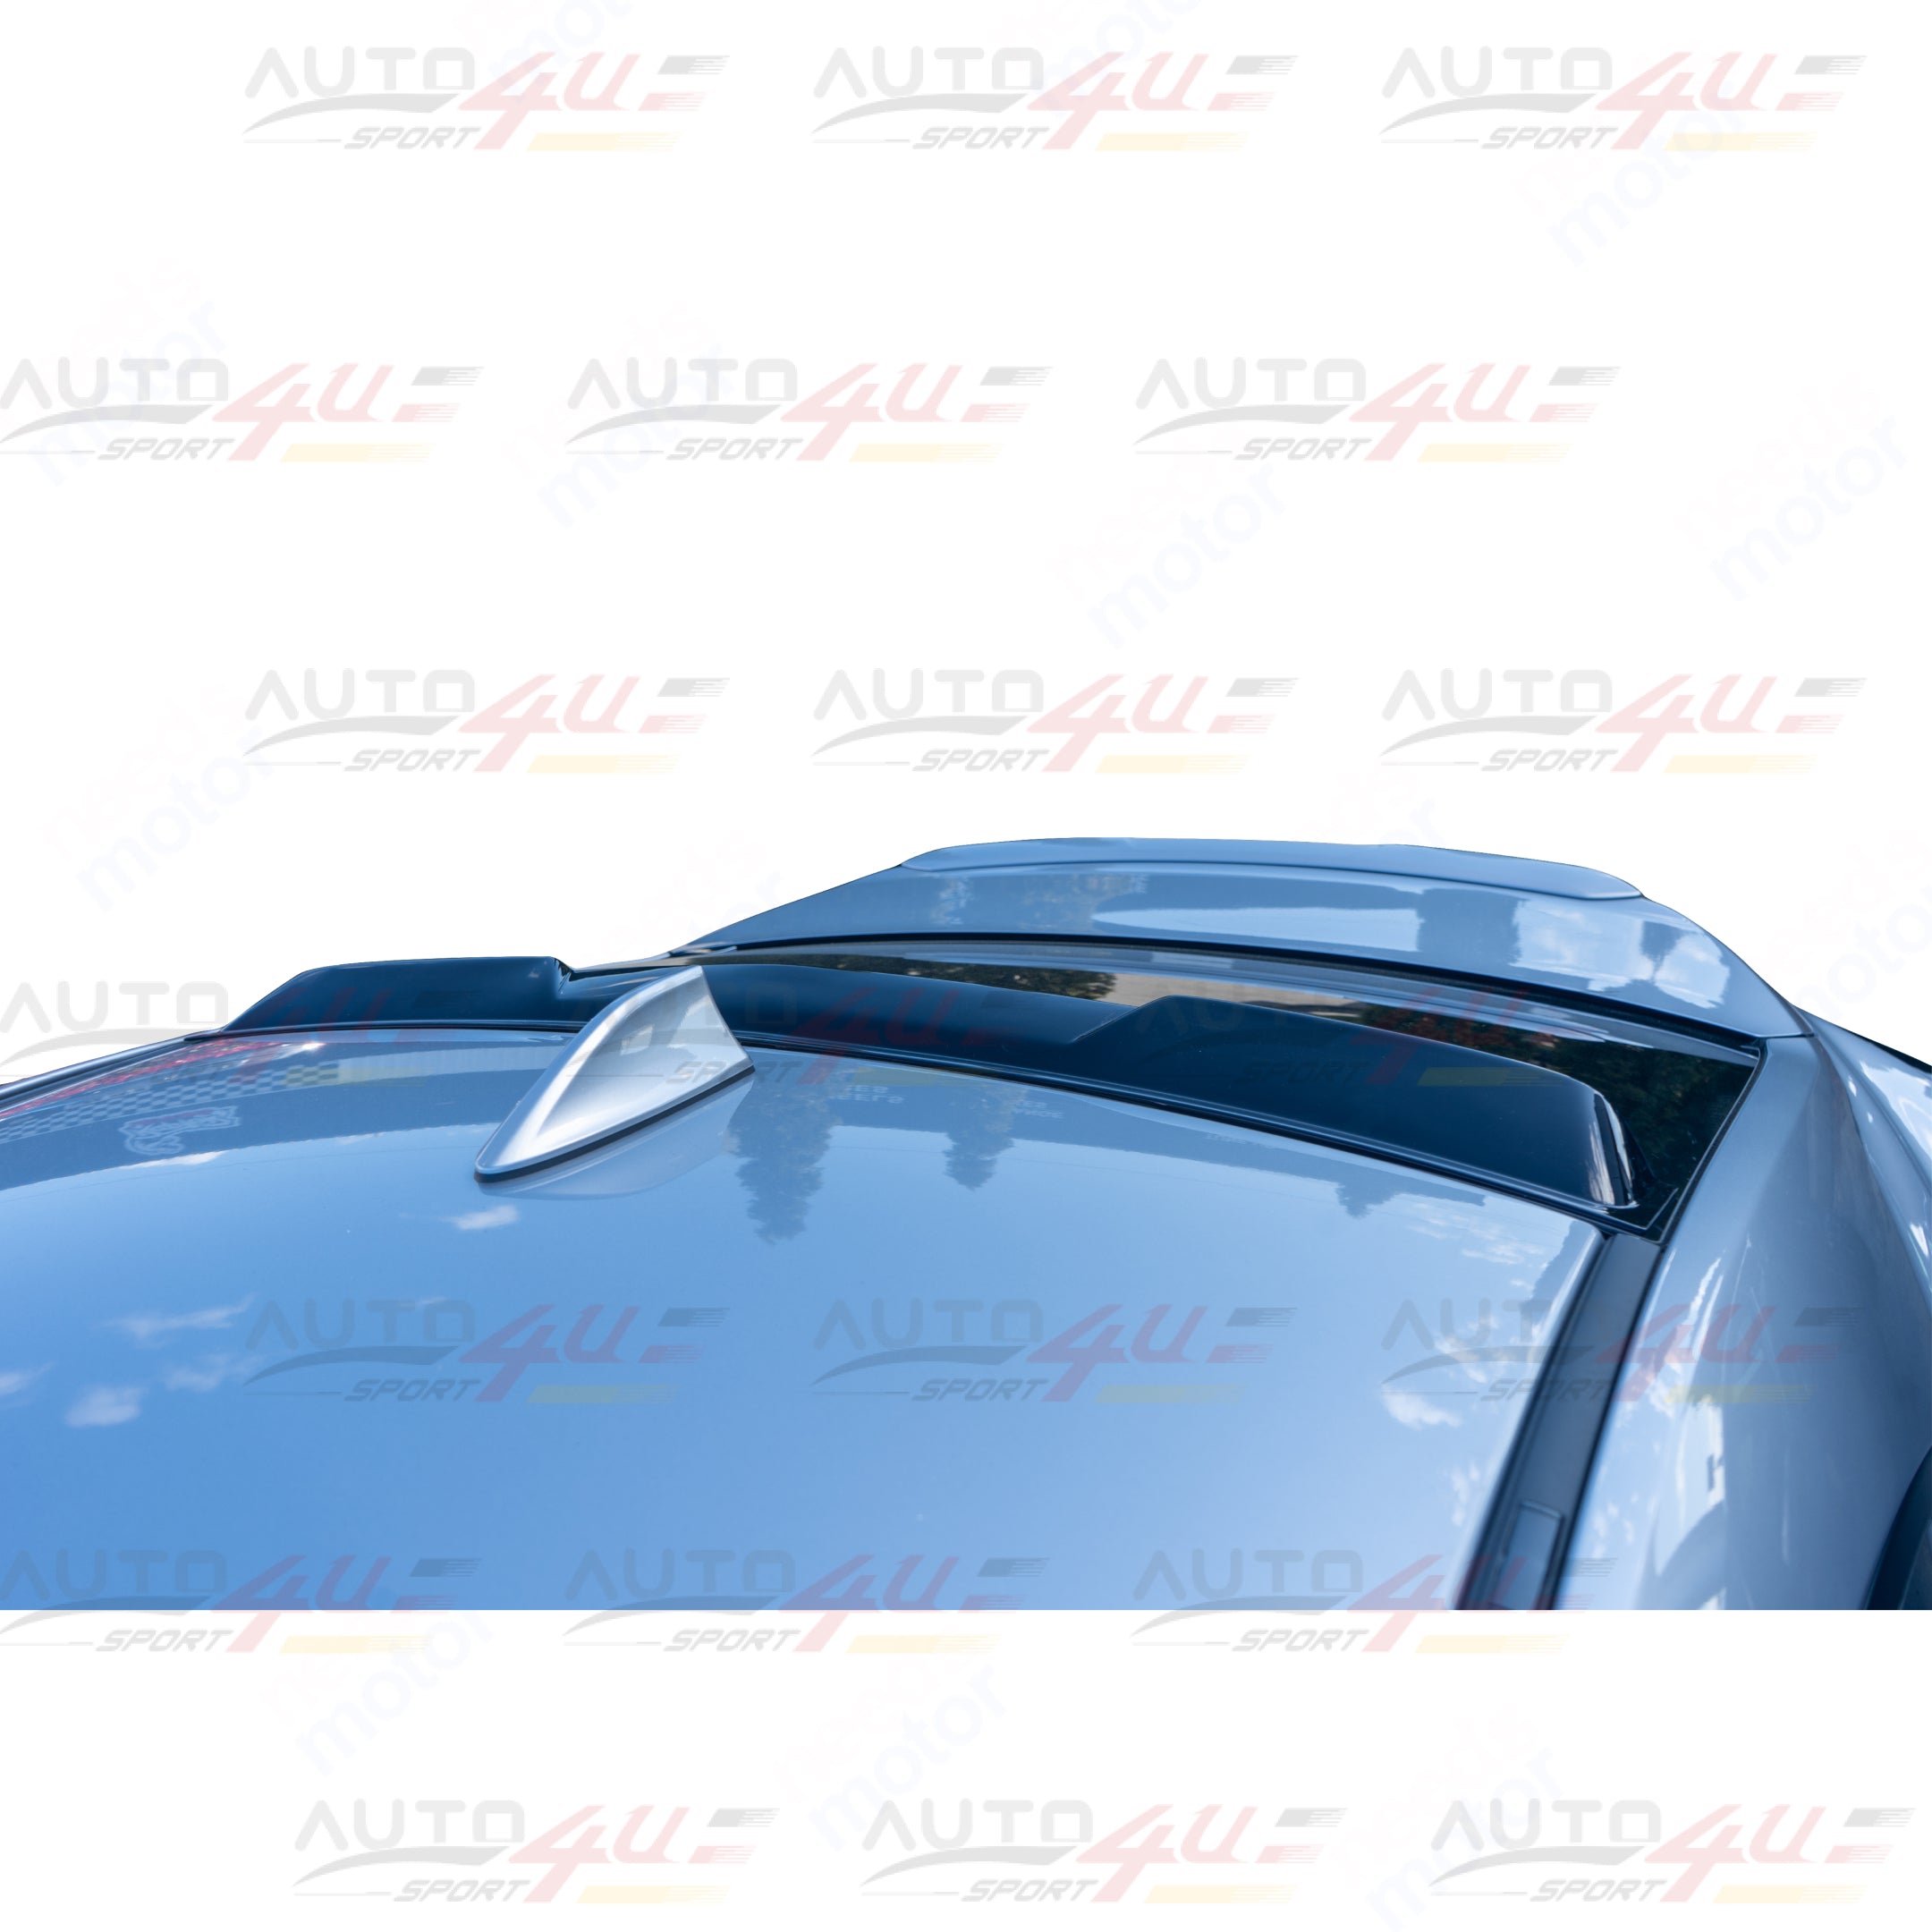 Fits for 2014-2021 Mazda6 Gloss Black ABS Rear Roof Window Visor Spoiler Wing